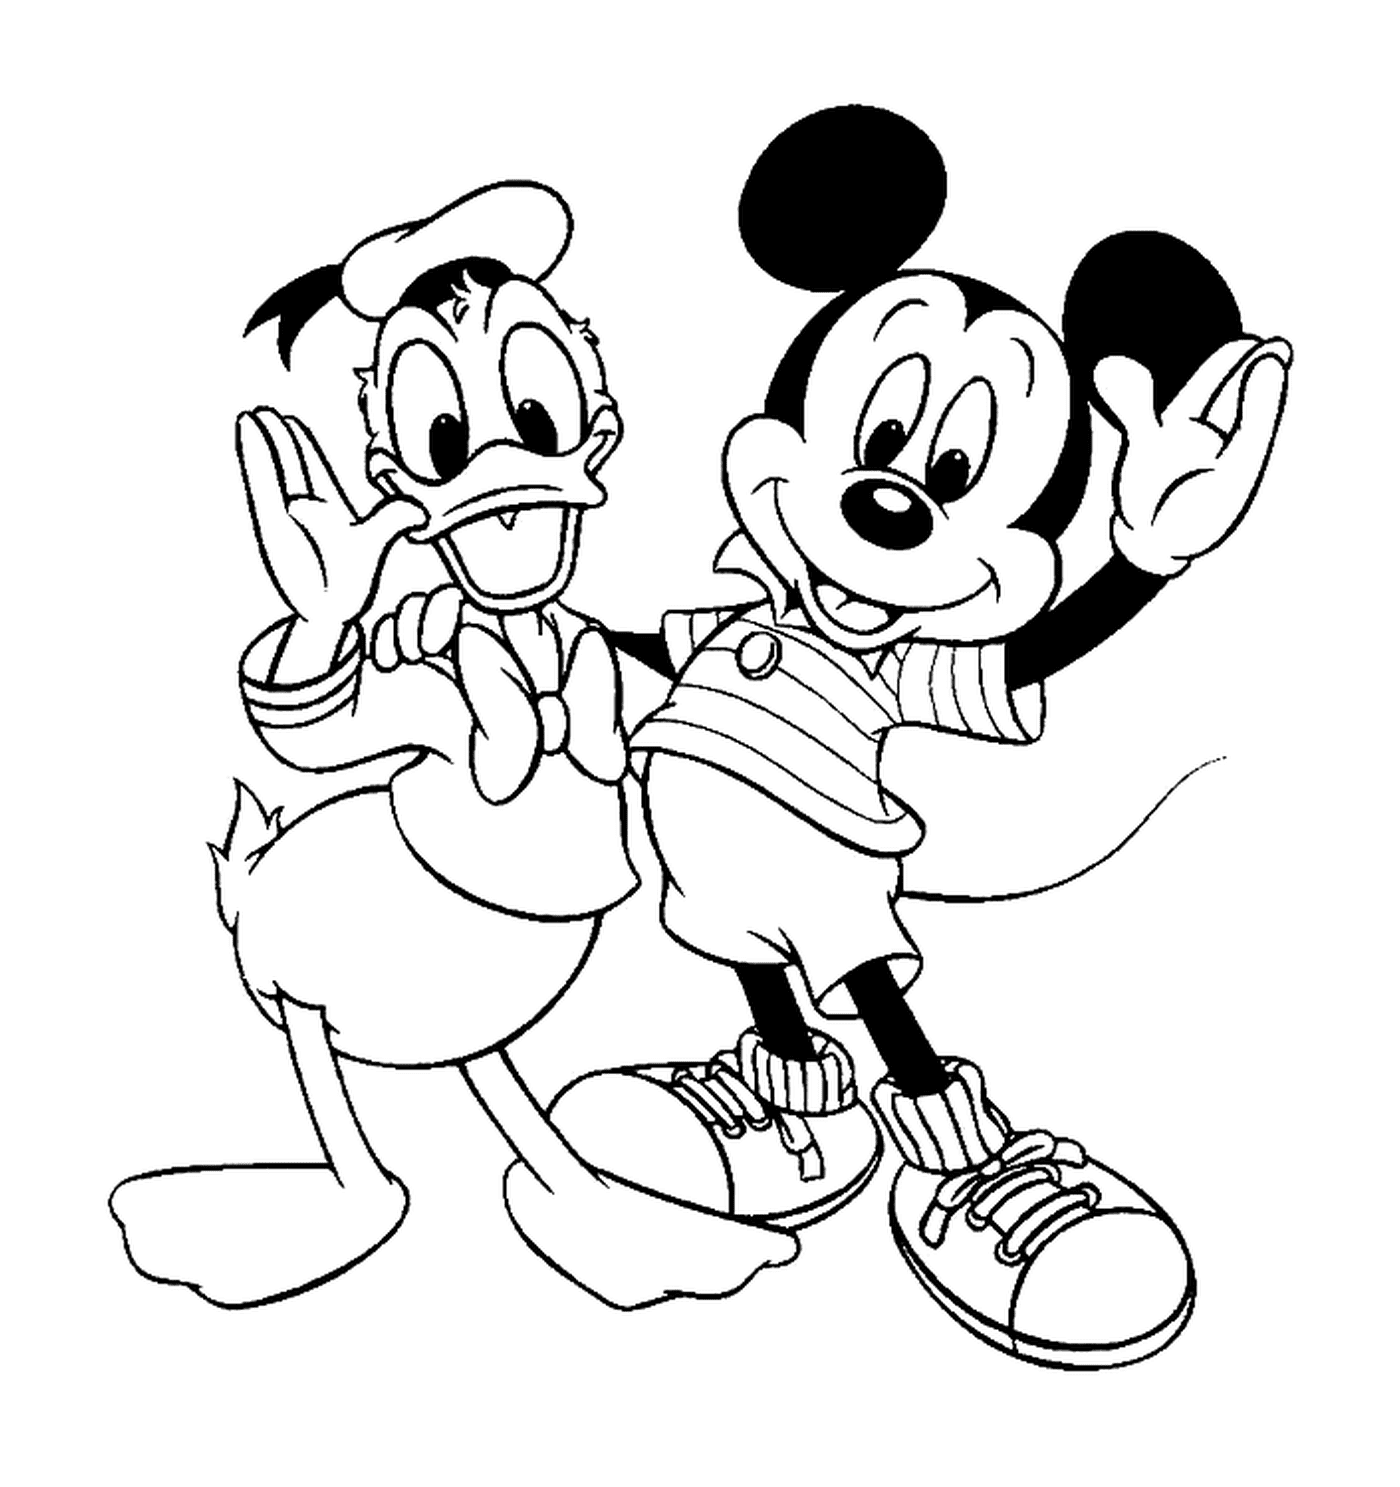  Mickey和他的朋友Donald:Mickey鼠和Donald Duck 